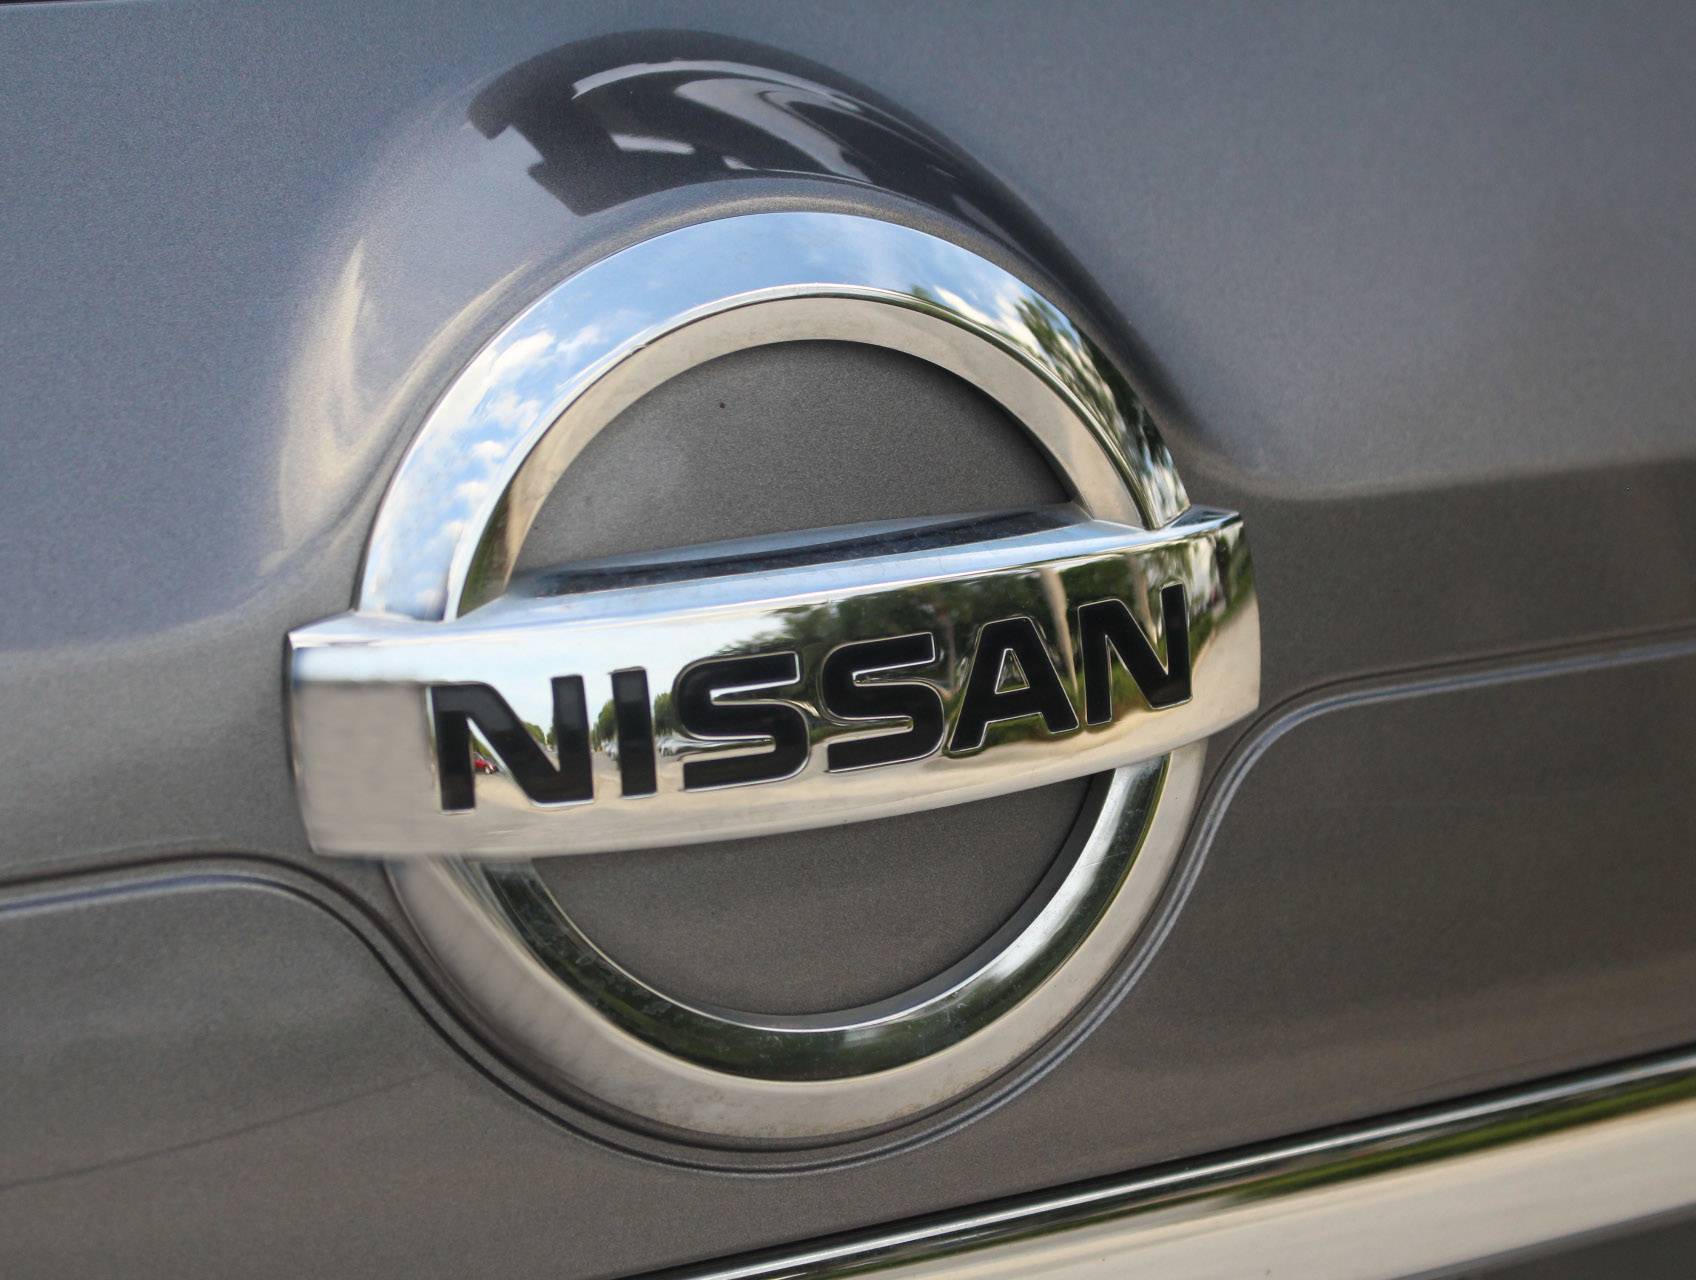 Florida Fine Cars - Used NISSAN ROGUE 2016 MIAMI S